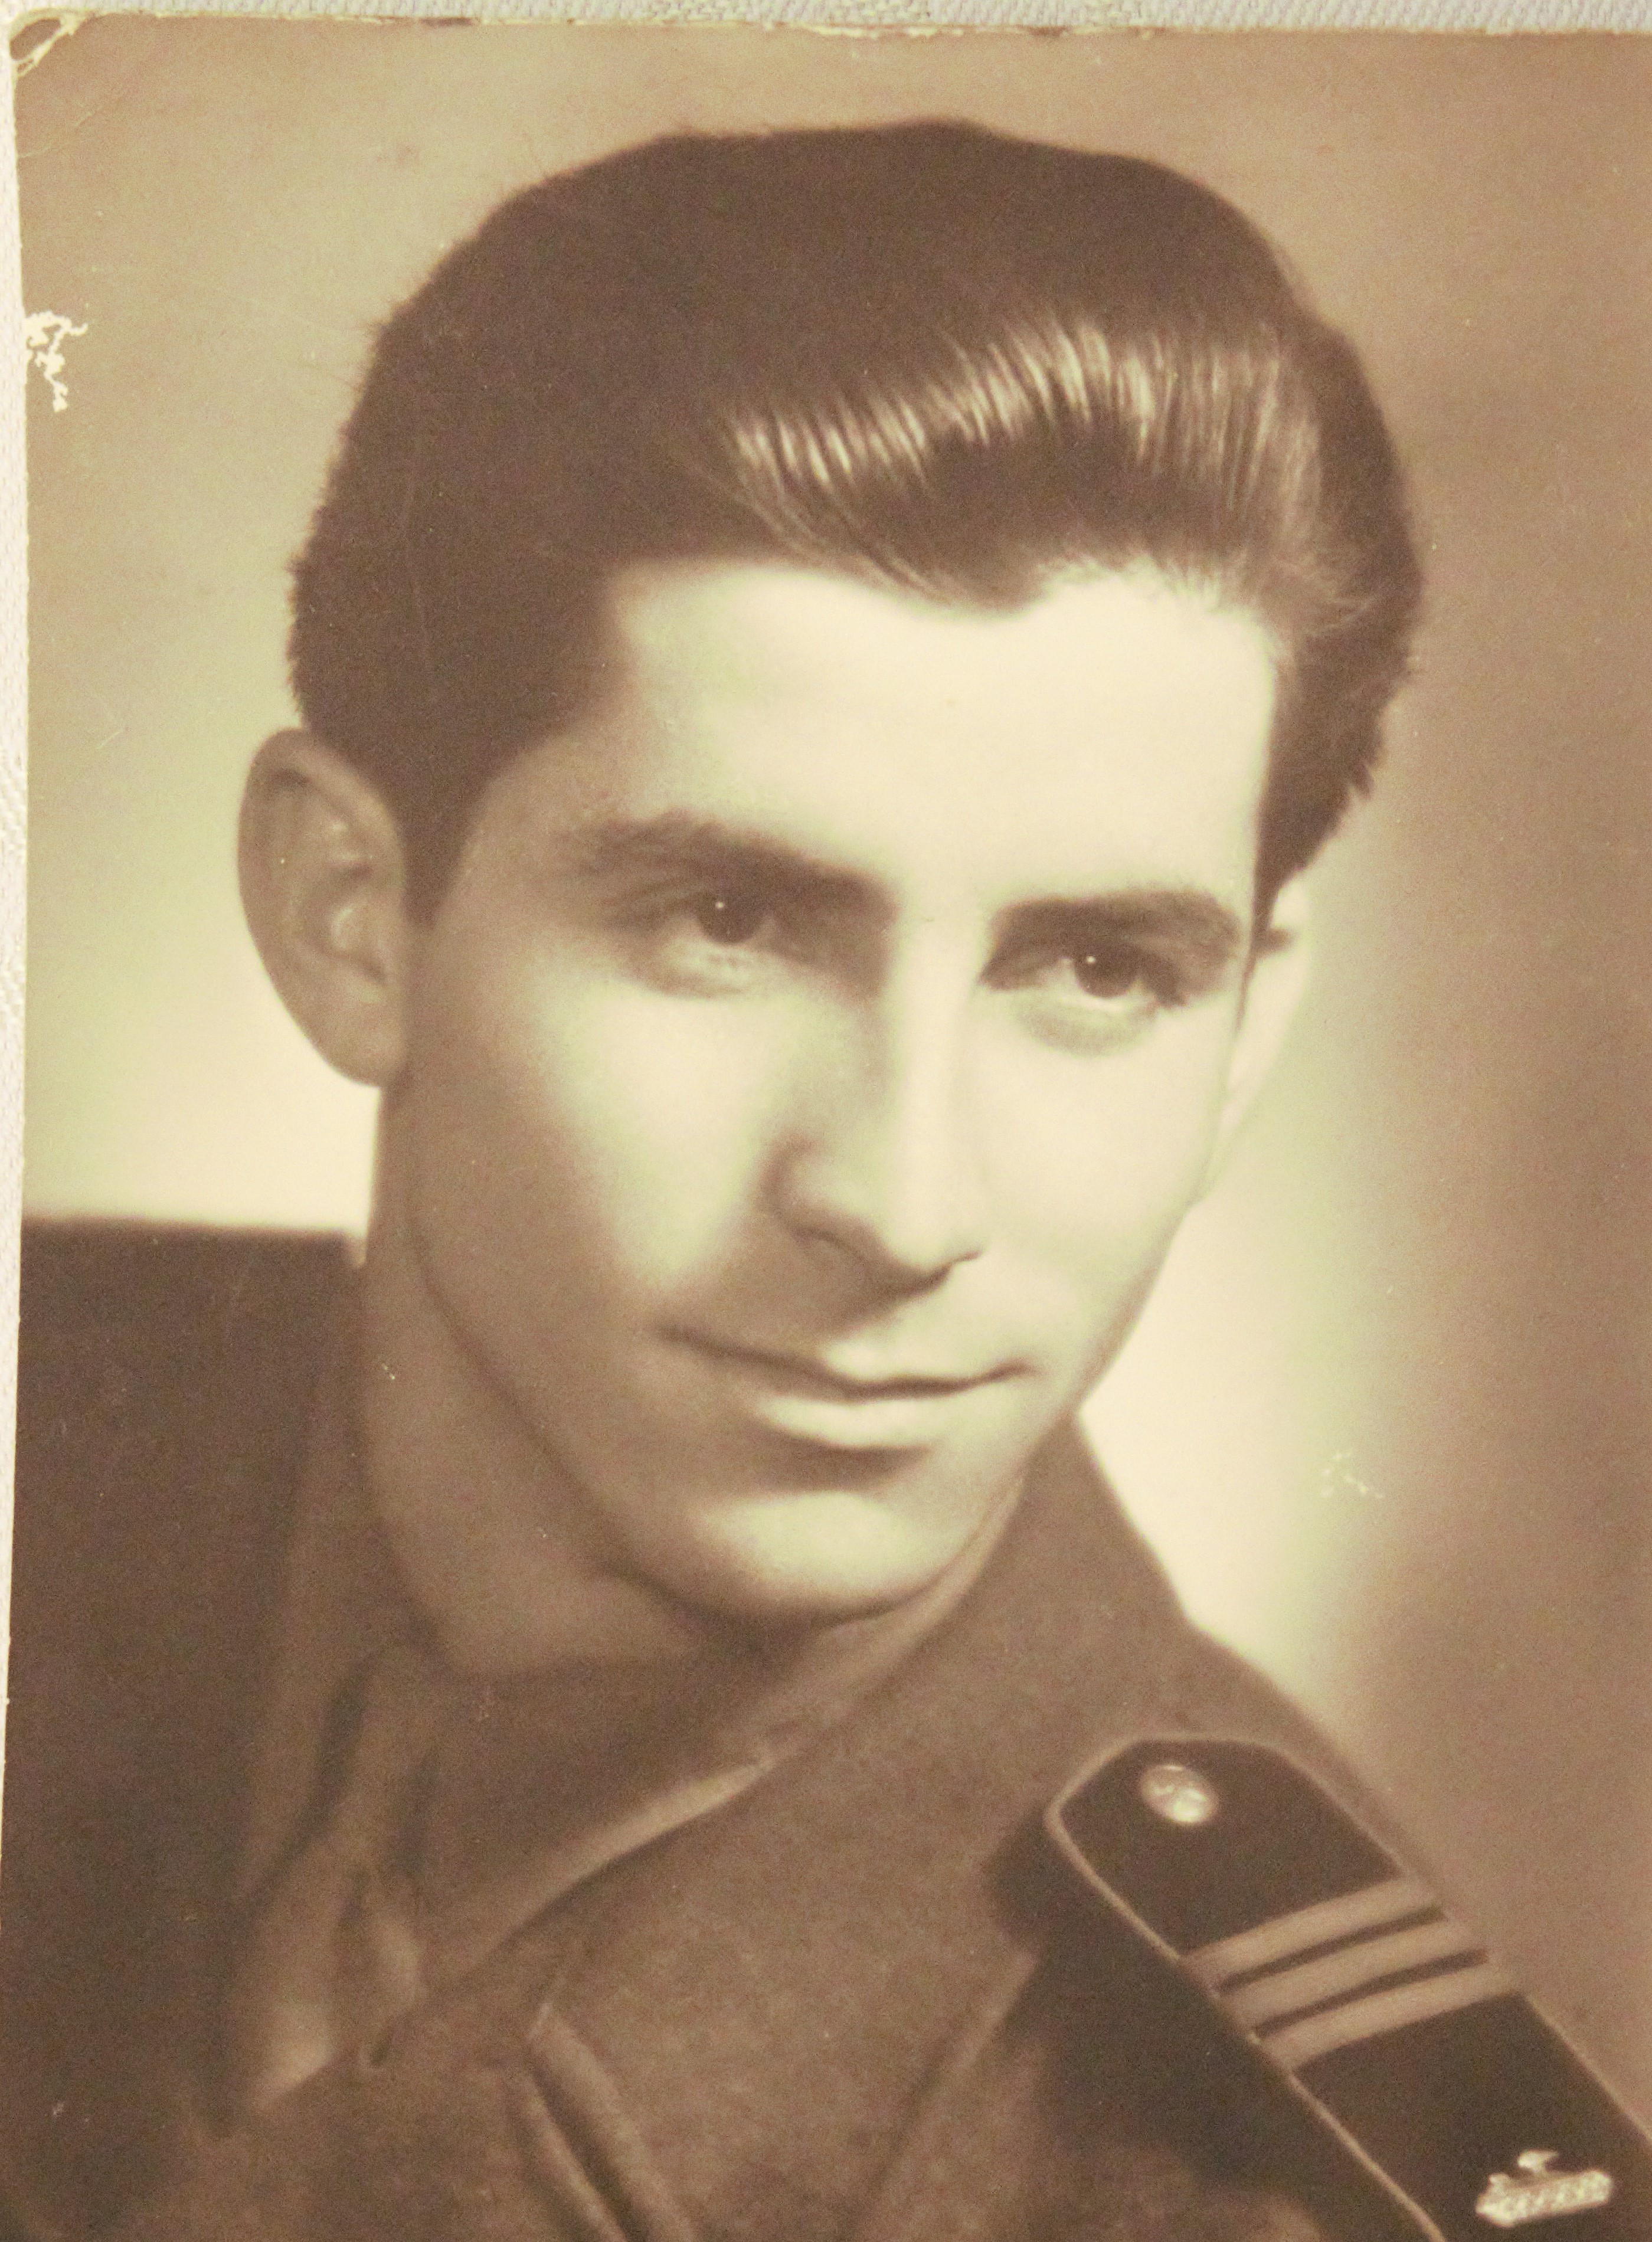 Josef Mišák during the military service, 1951